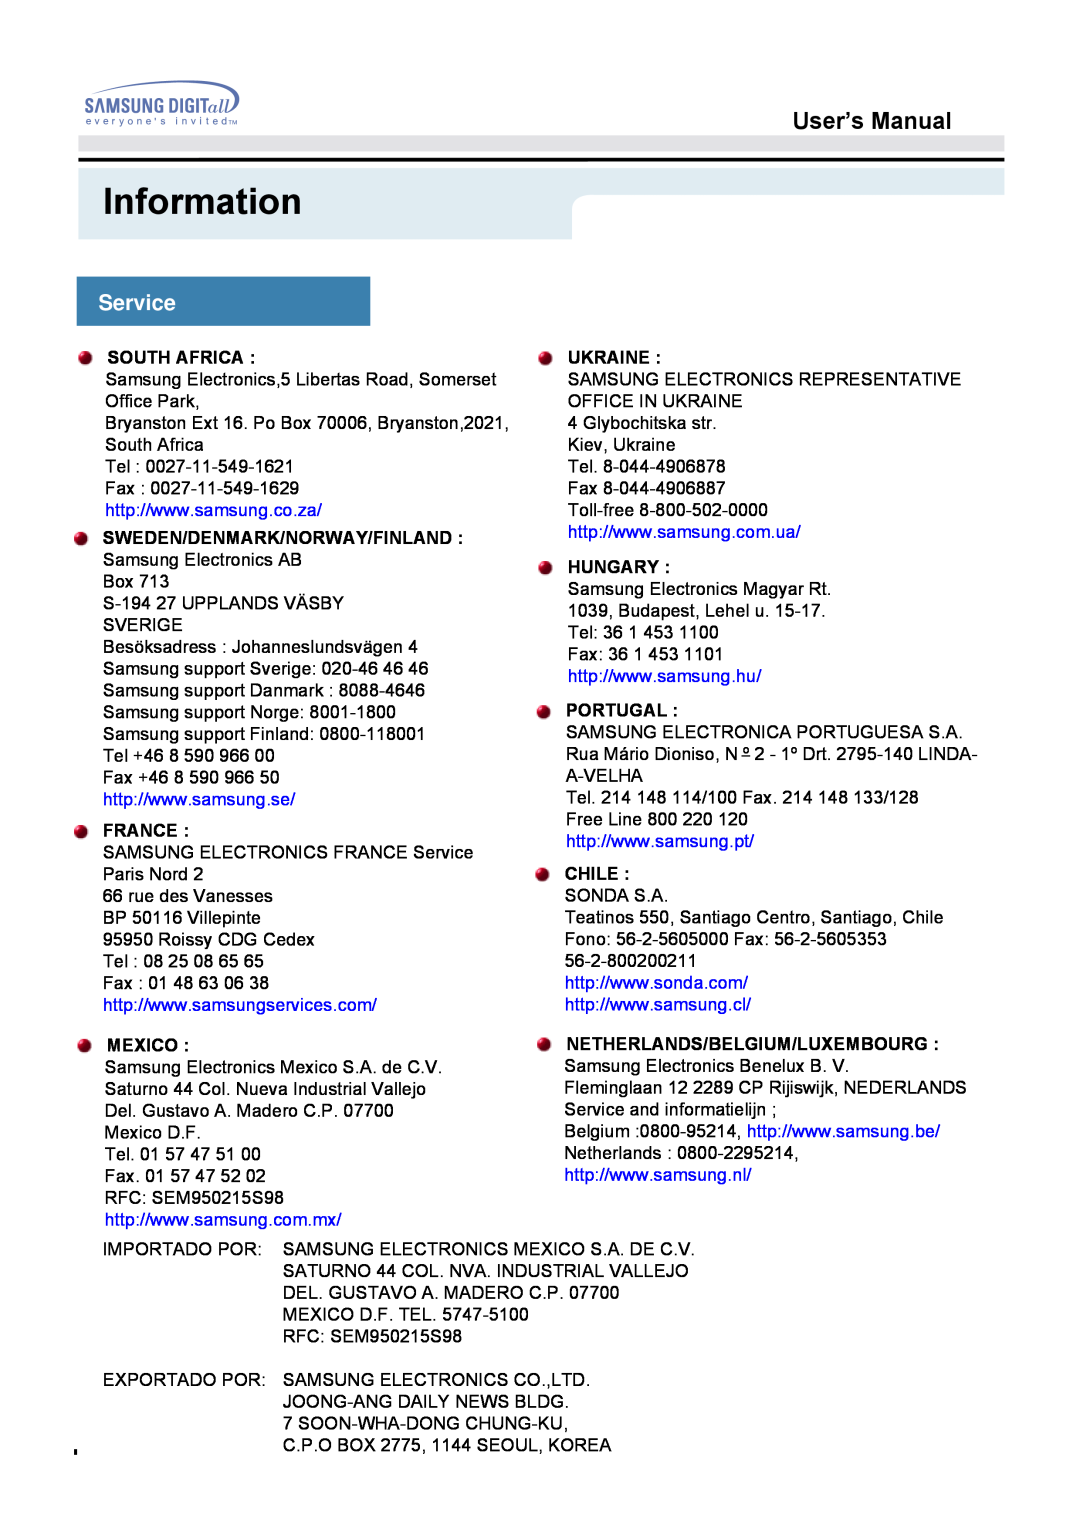 Samsung 171Q Service, Information, User’s Manual, South Africa, Sweden/Denmark/Norway/Finland, France, Mexico, Ukraine 